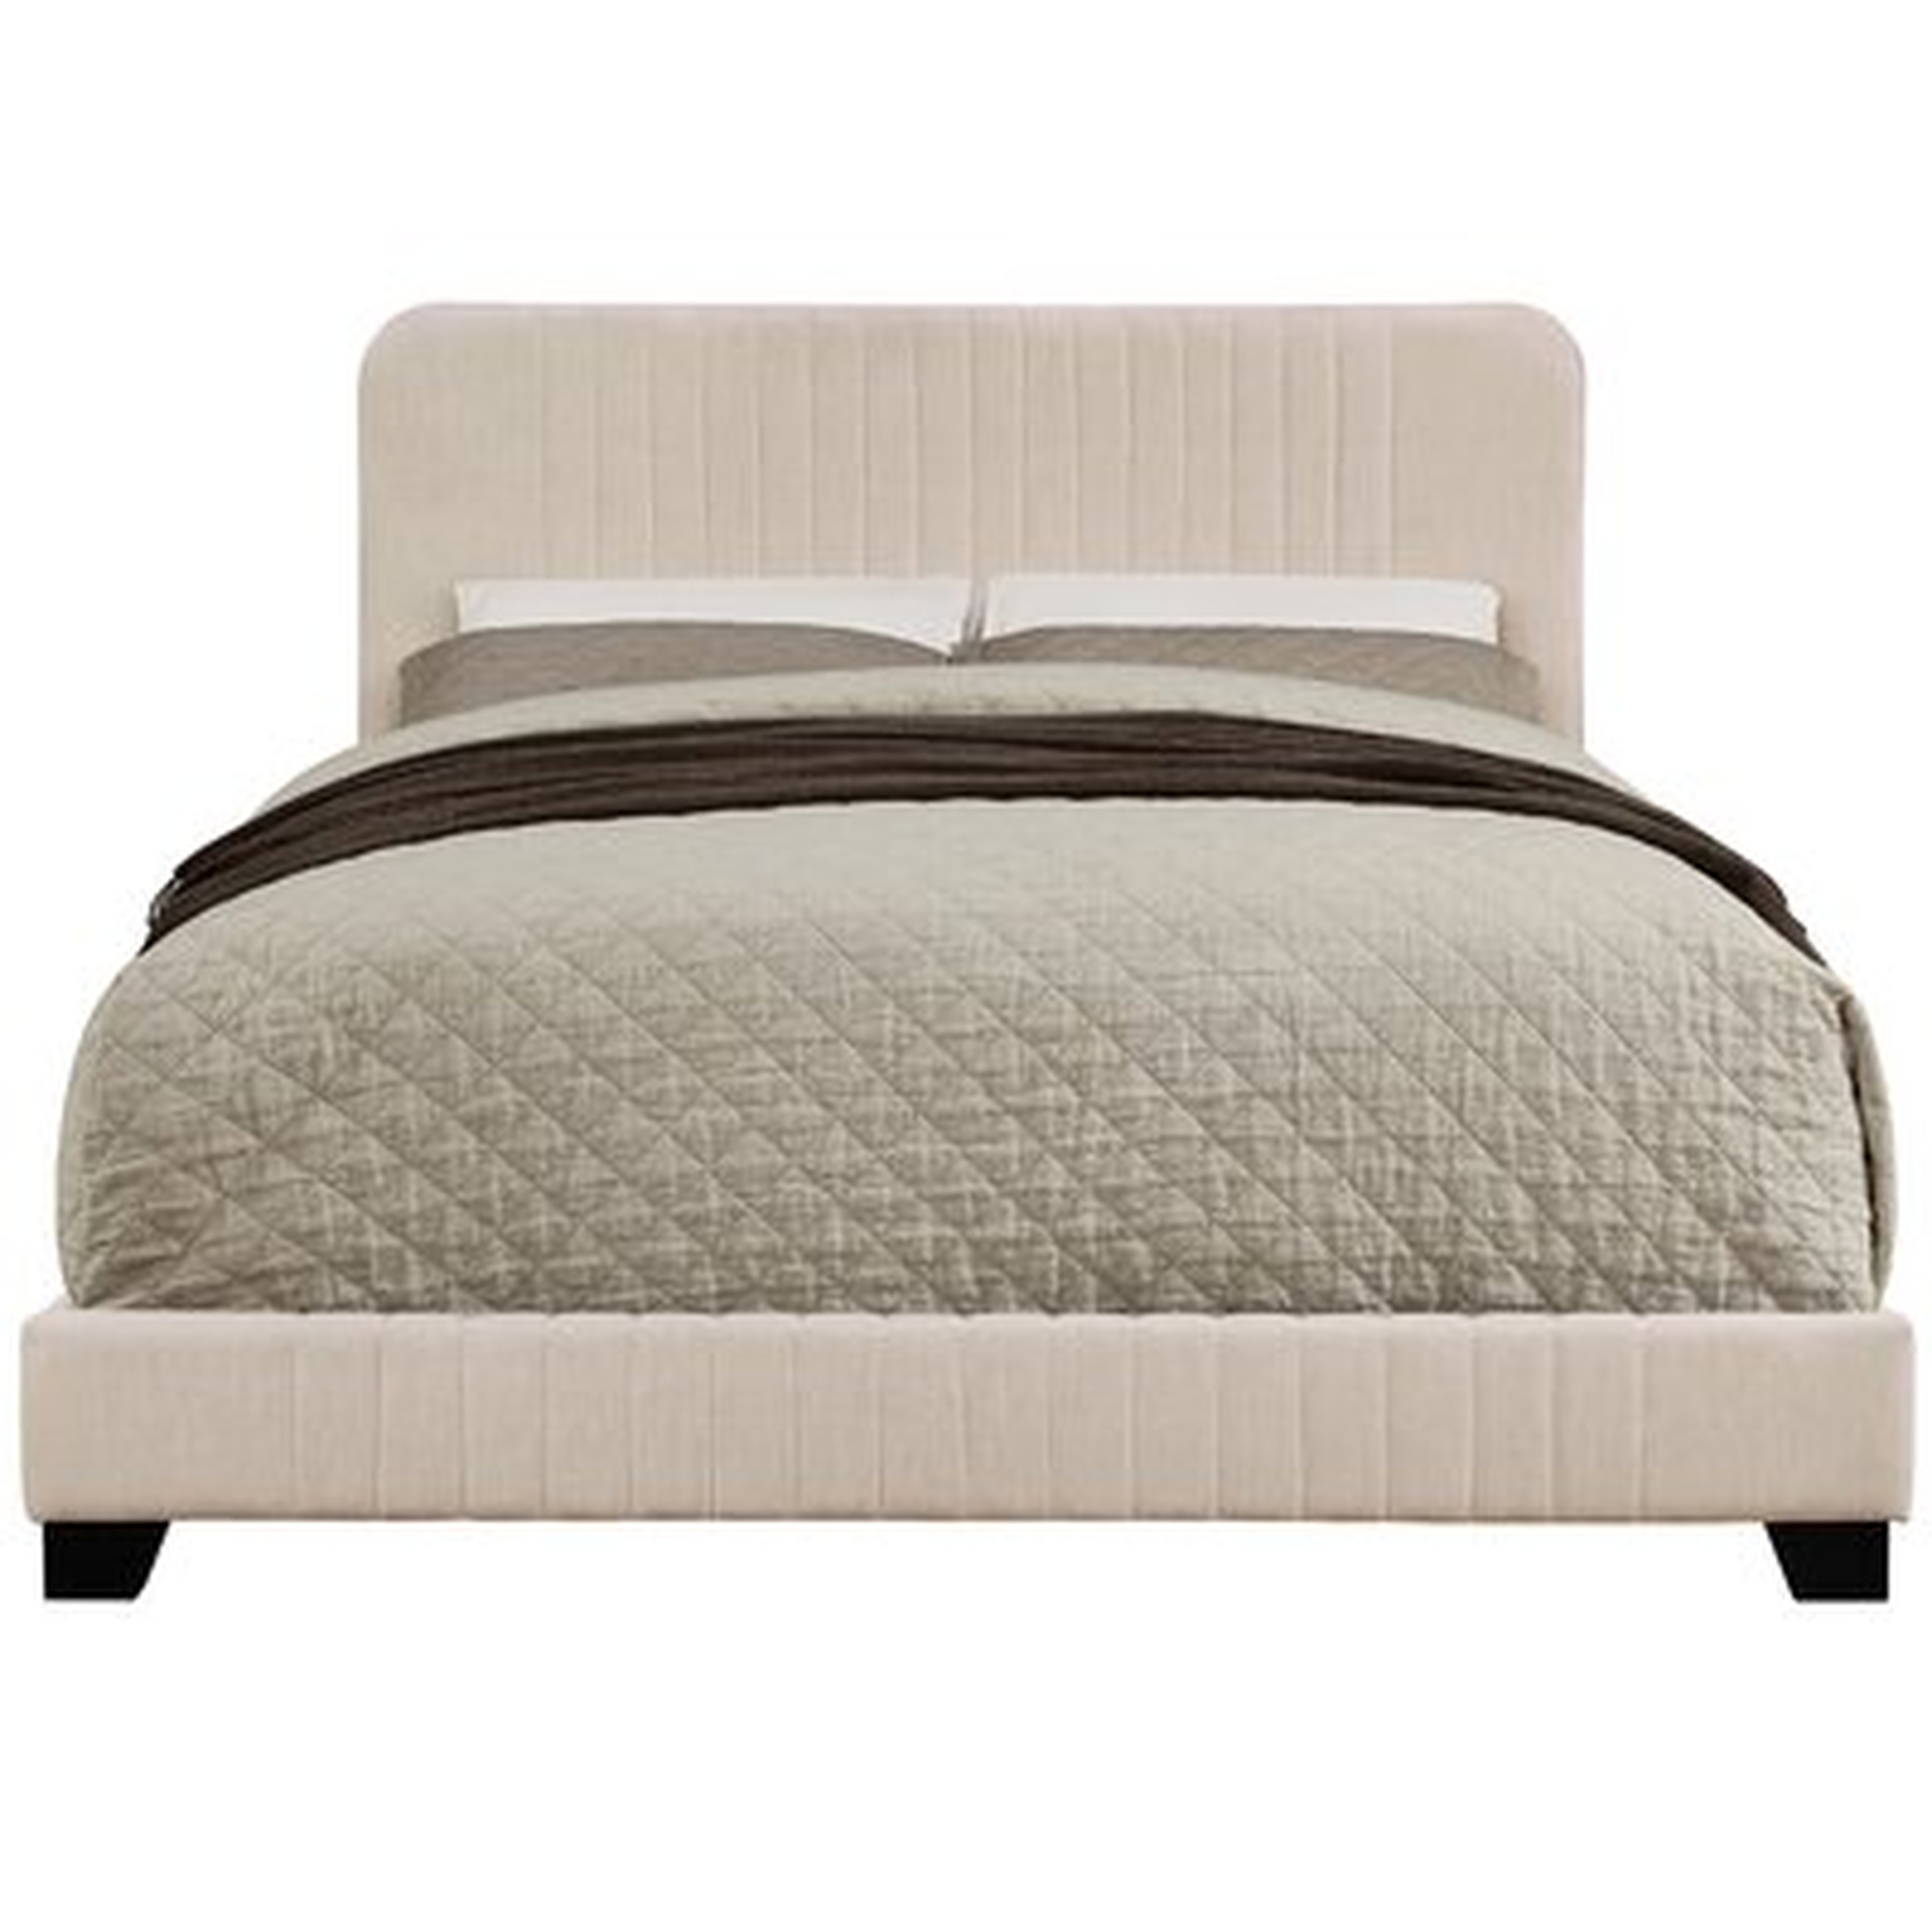 Delp Mid-Century Upholstered Standard Bed - Wayfair